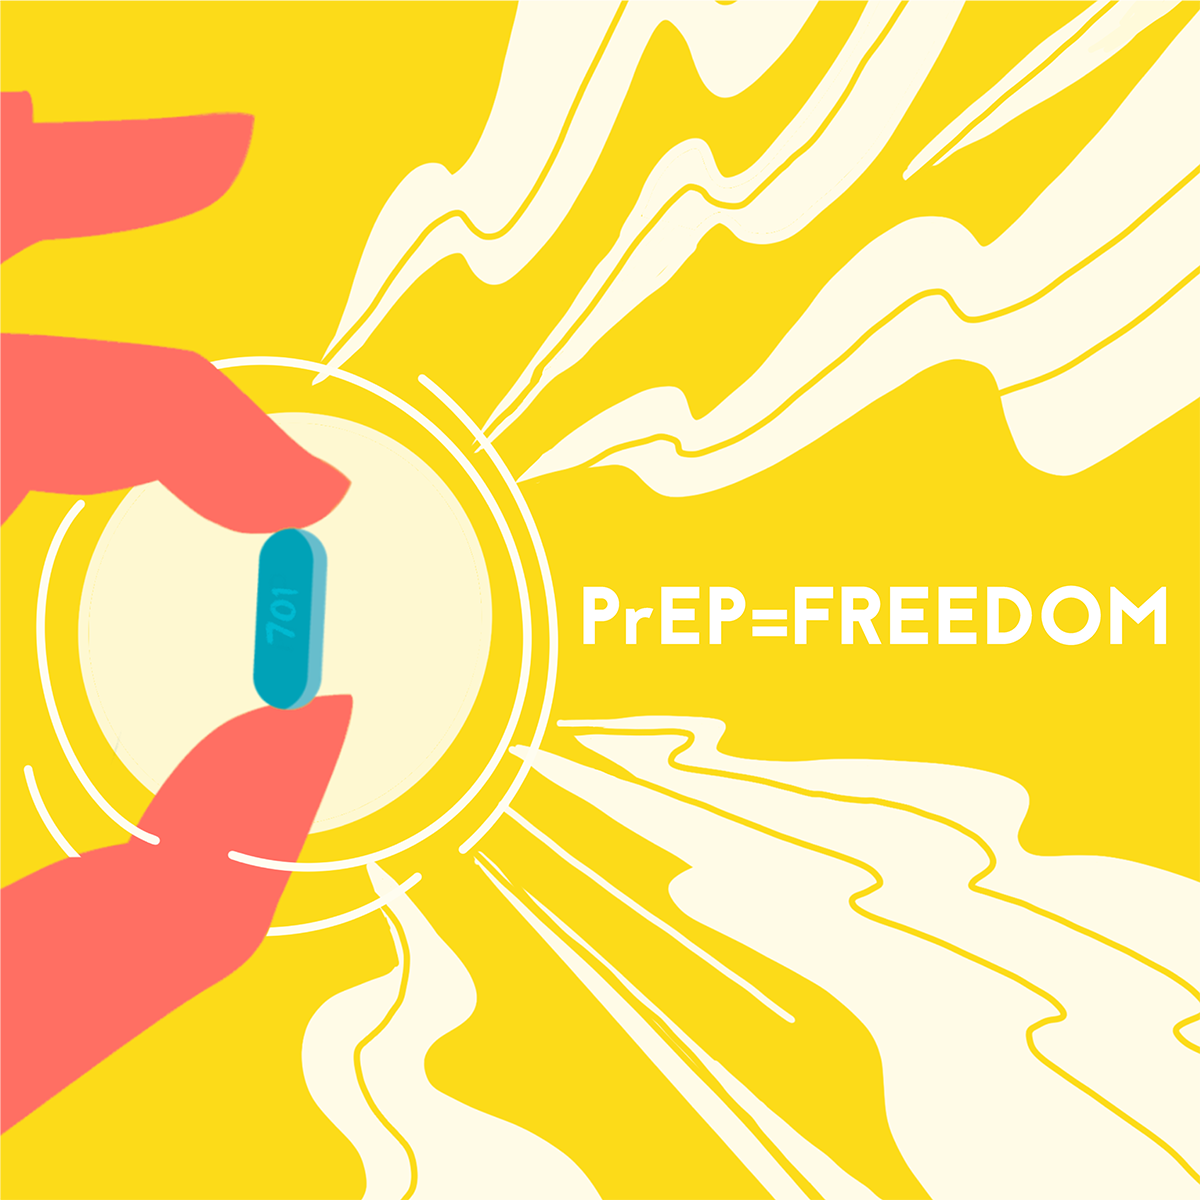 PrEP = Freedom